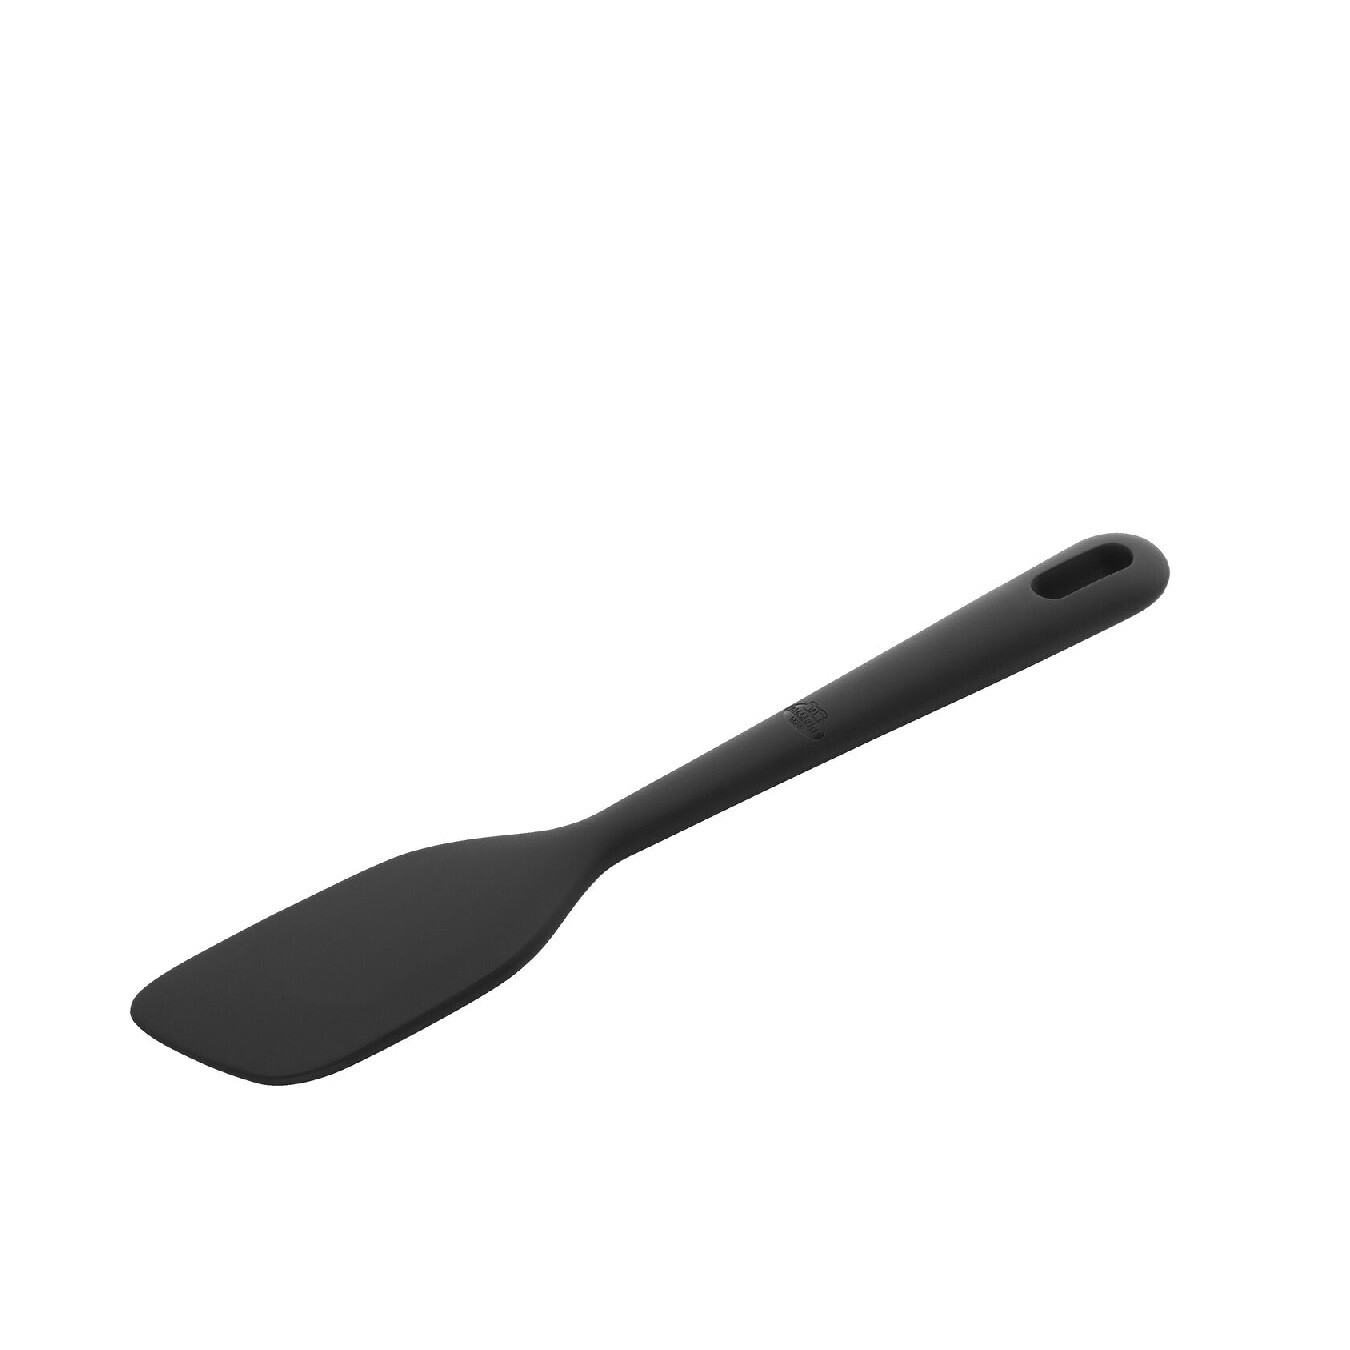 BALLARINI 'nero' pannenlikker 28cm silicone zwart PROMO 9,95-3,00